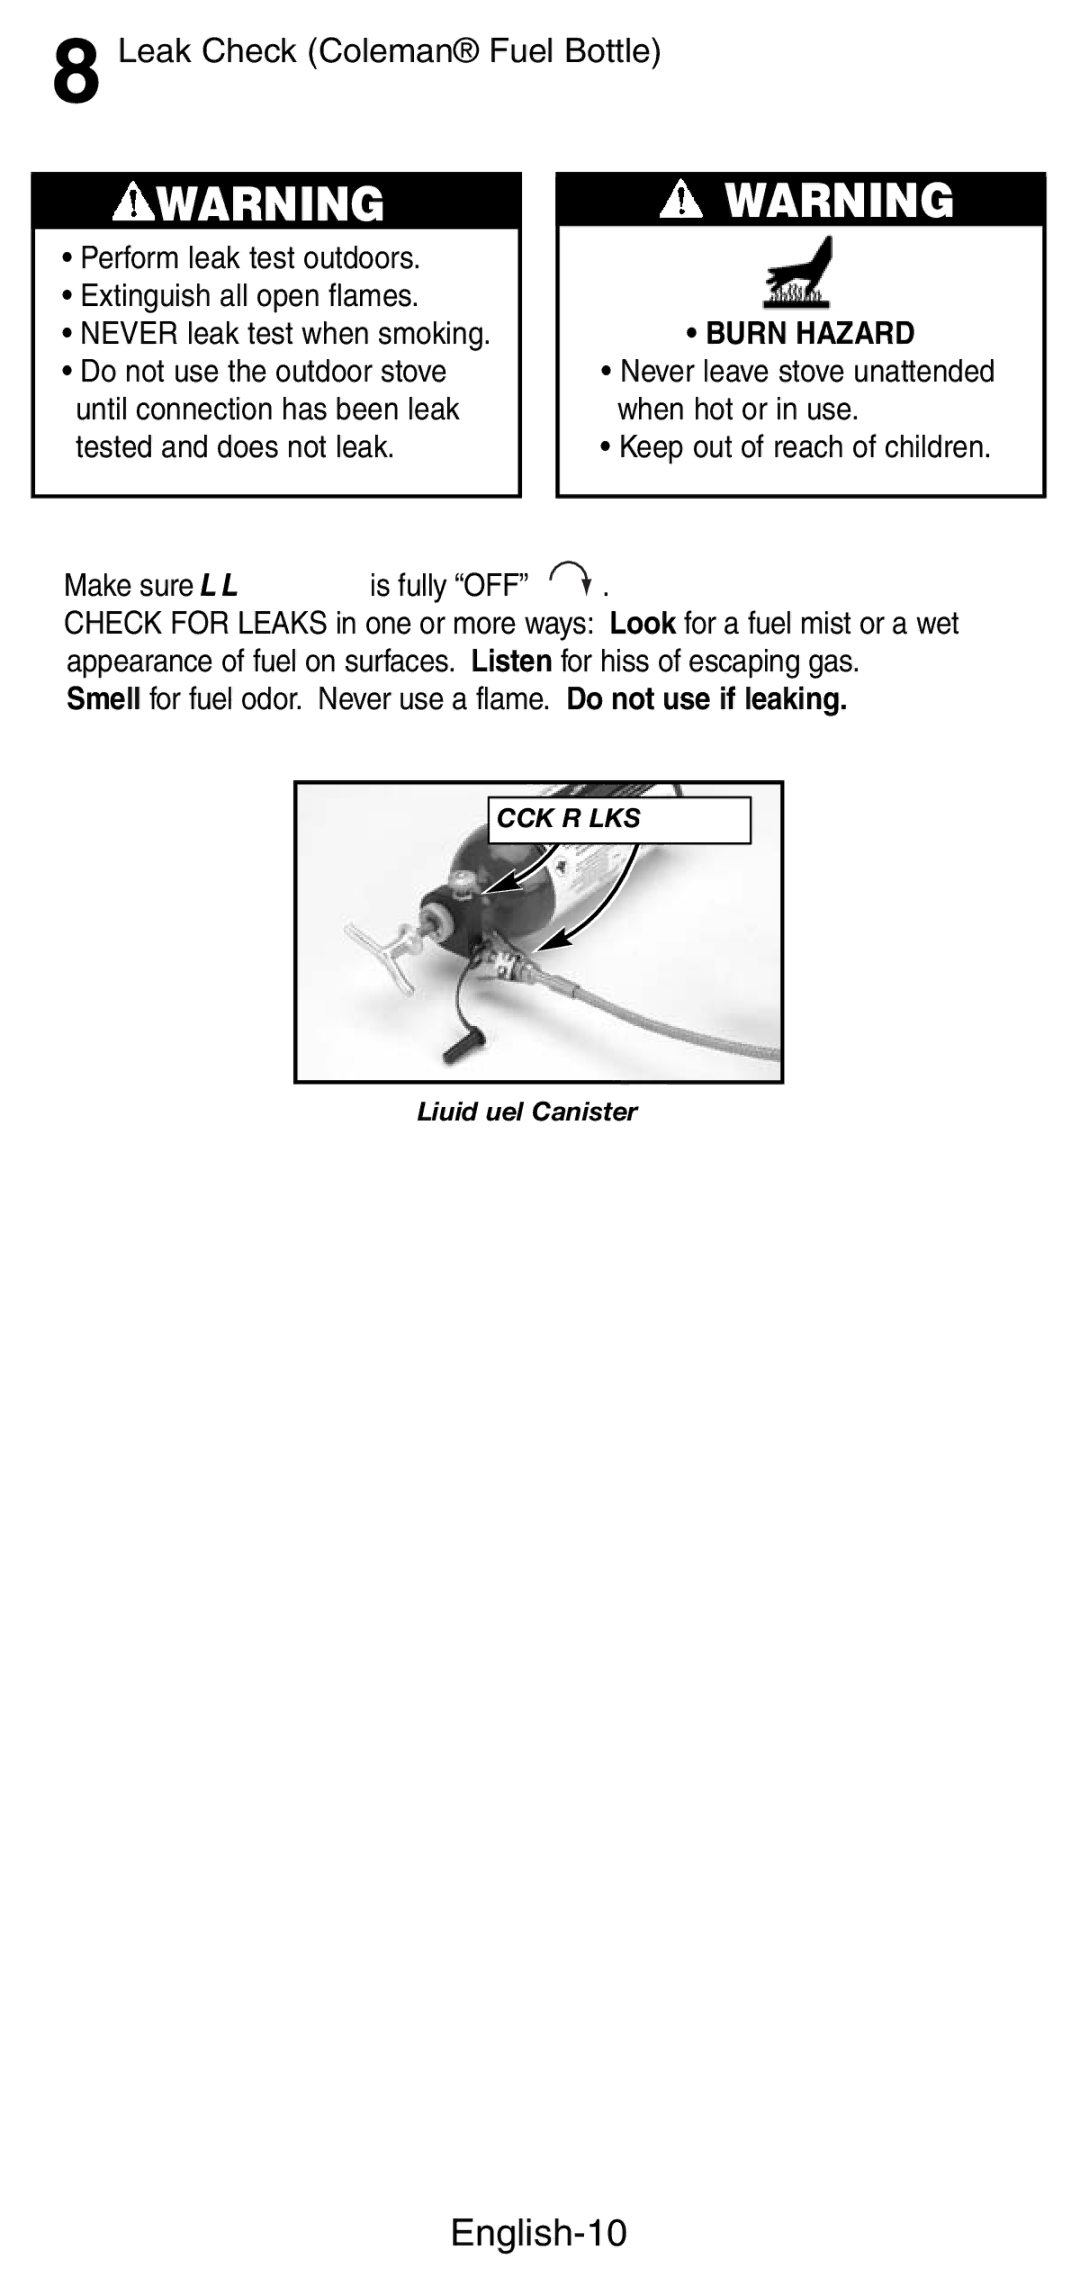 Coleman 9790 manual English-10, Leak Check Coleman Fuel Bottle, Burn Hazard 